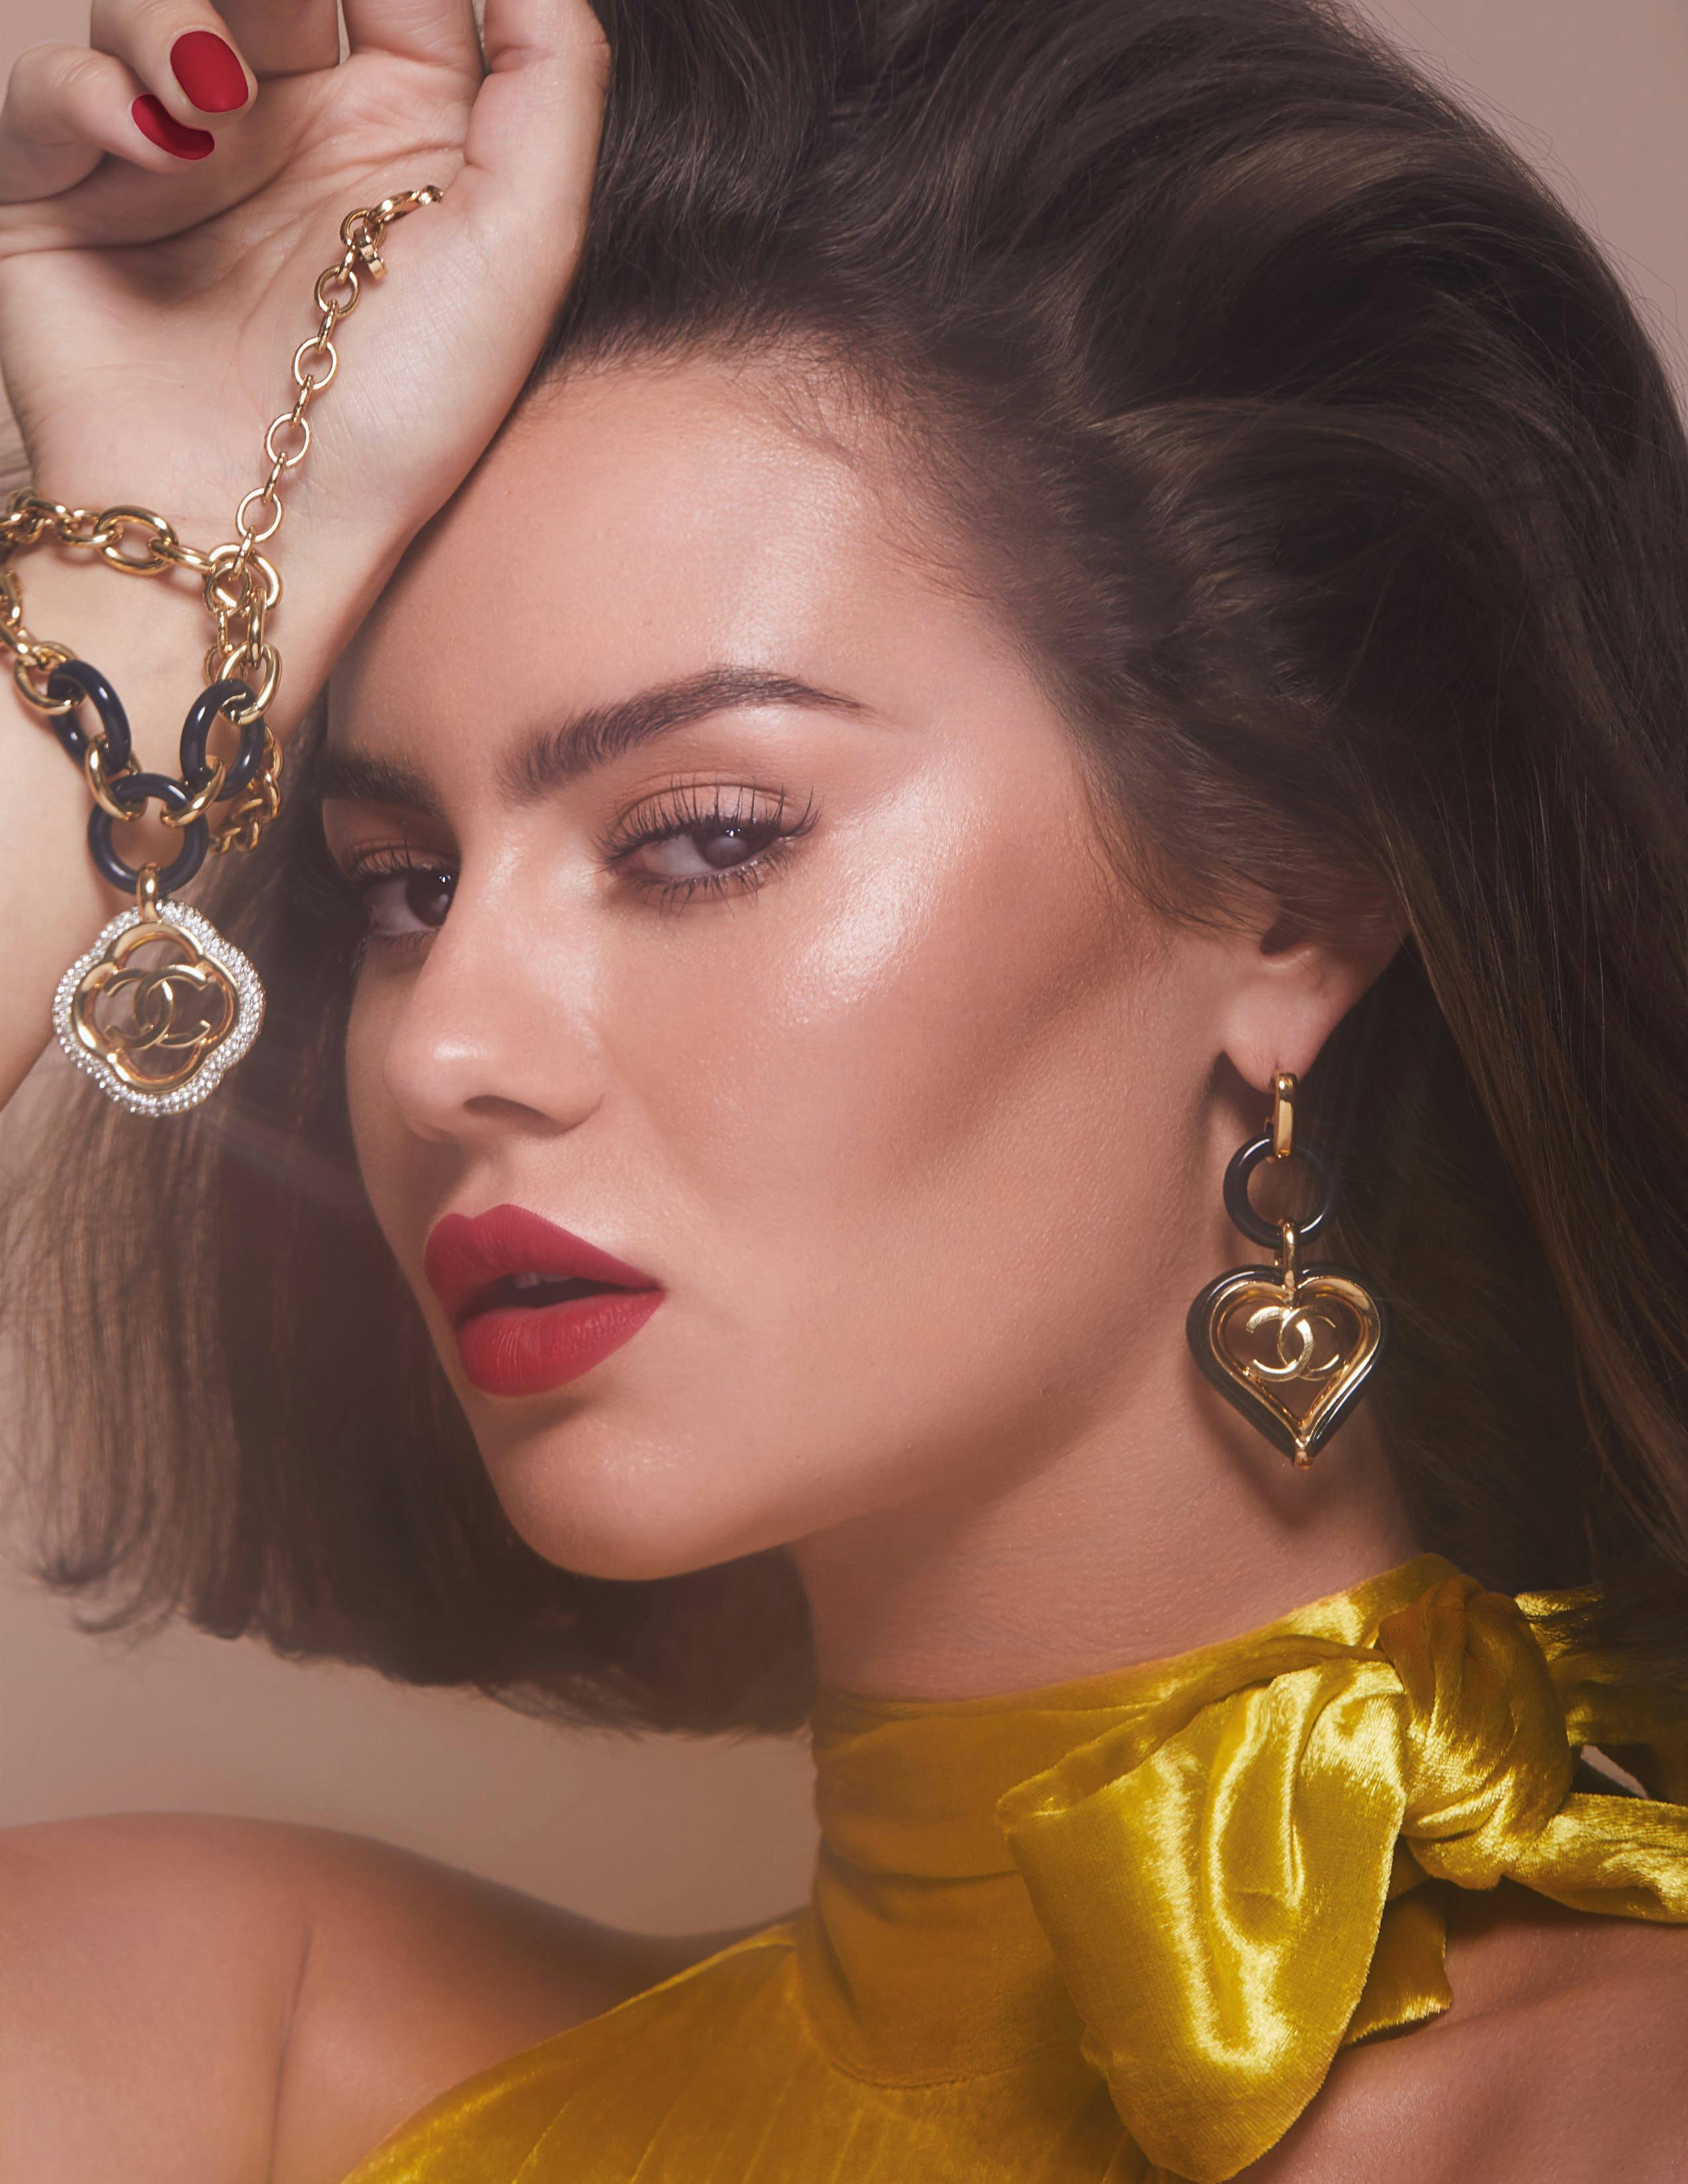 person human pendant lipstick cosmetics earring accessories jewelry accessory